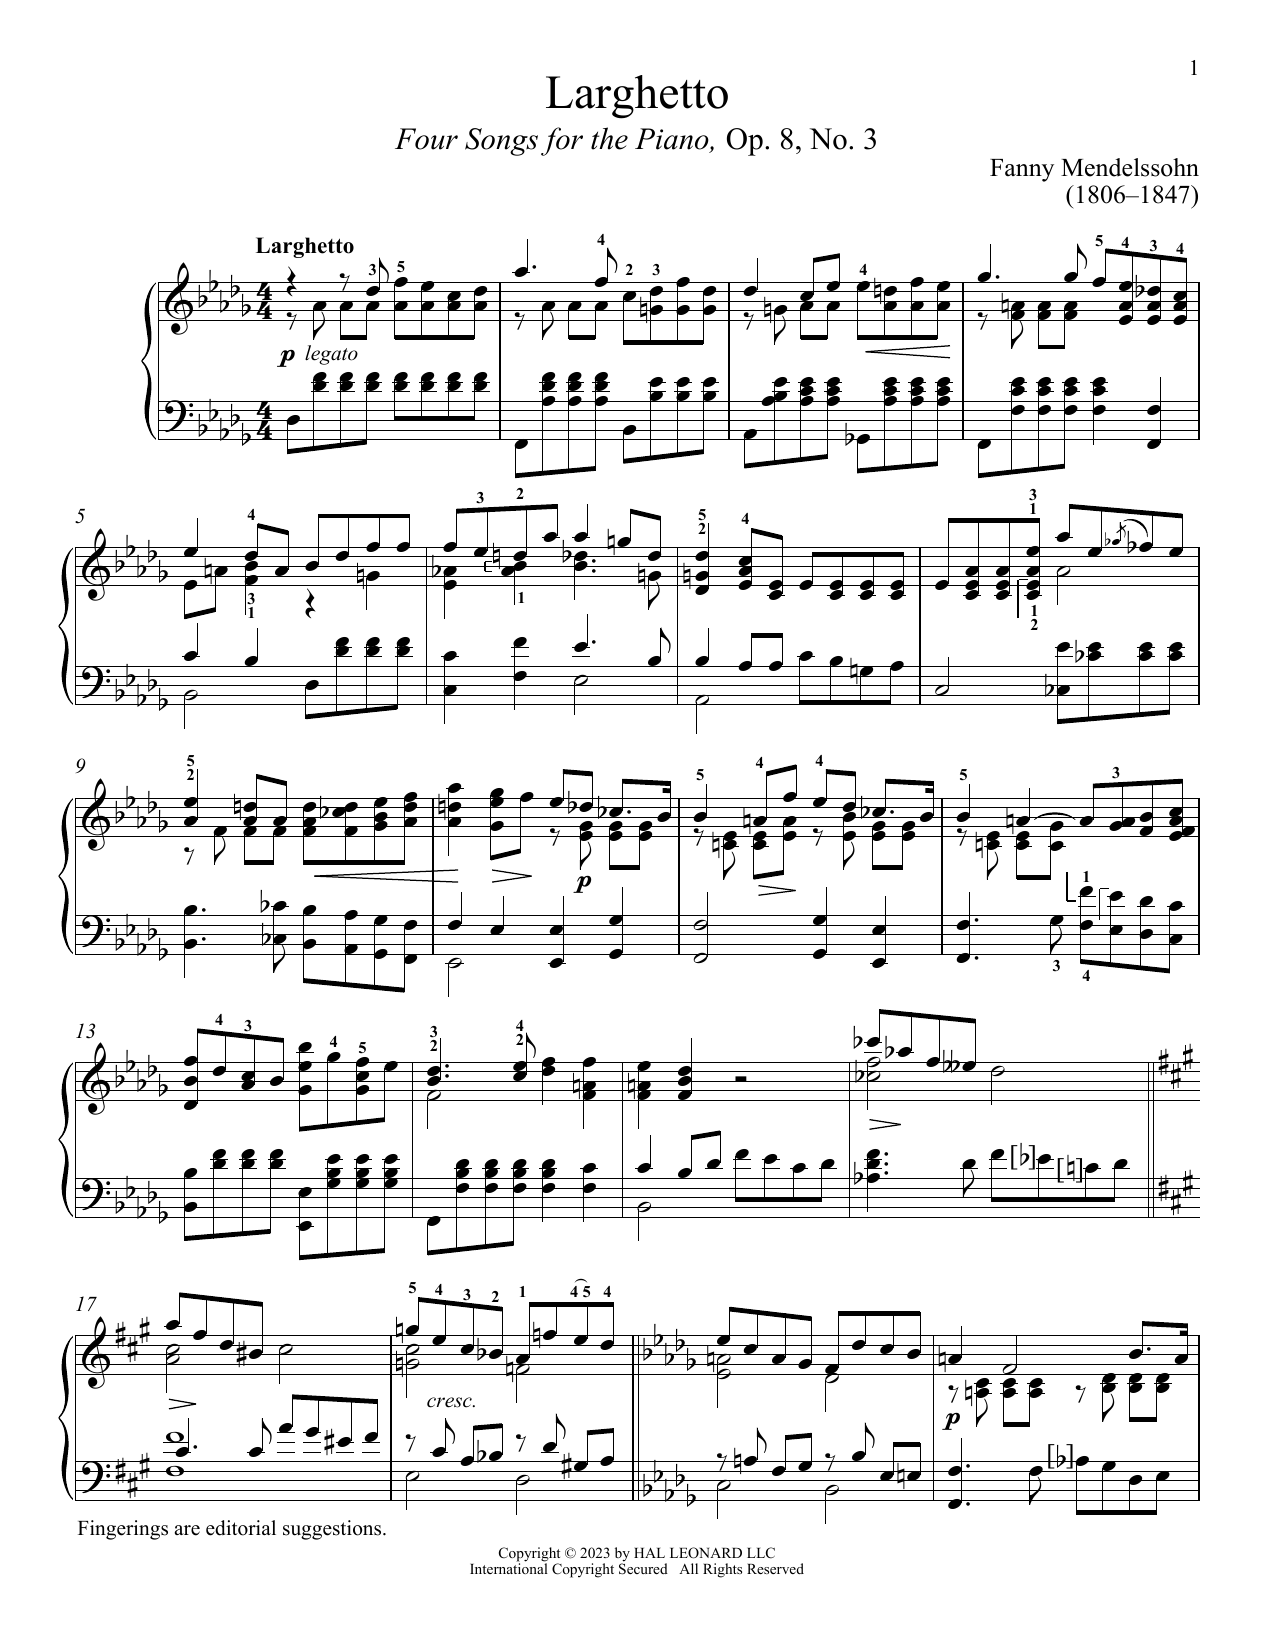 Download Fanny Mendelssohn Larghetto Sheet Music